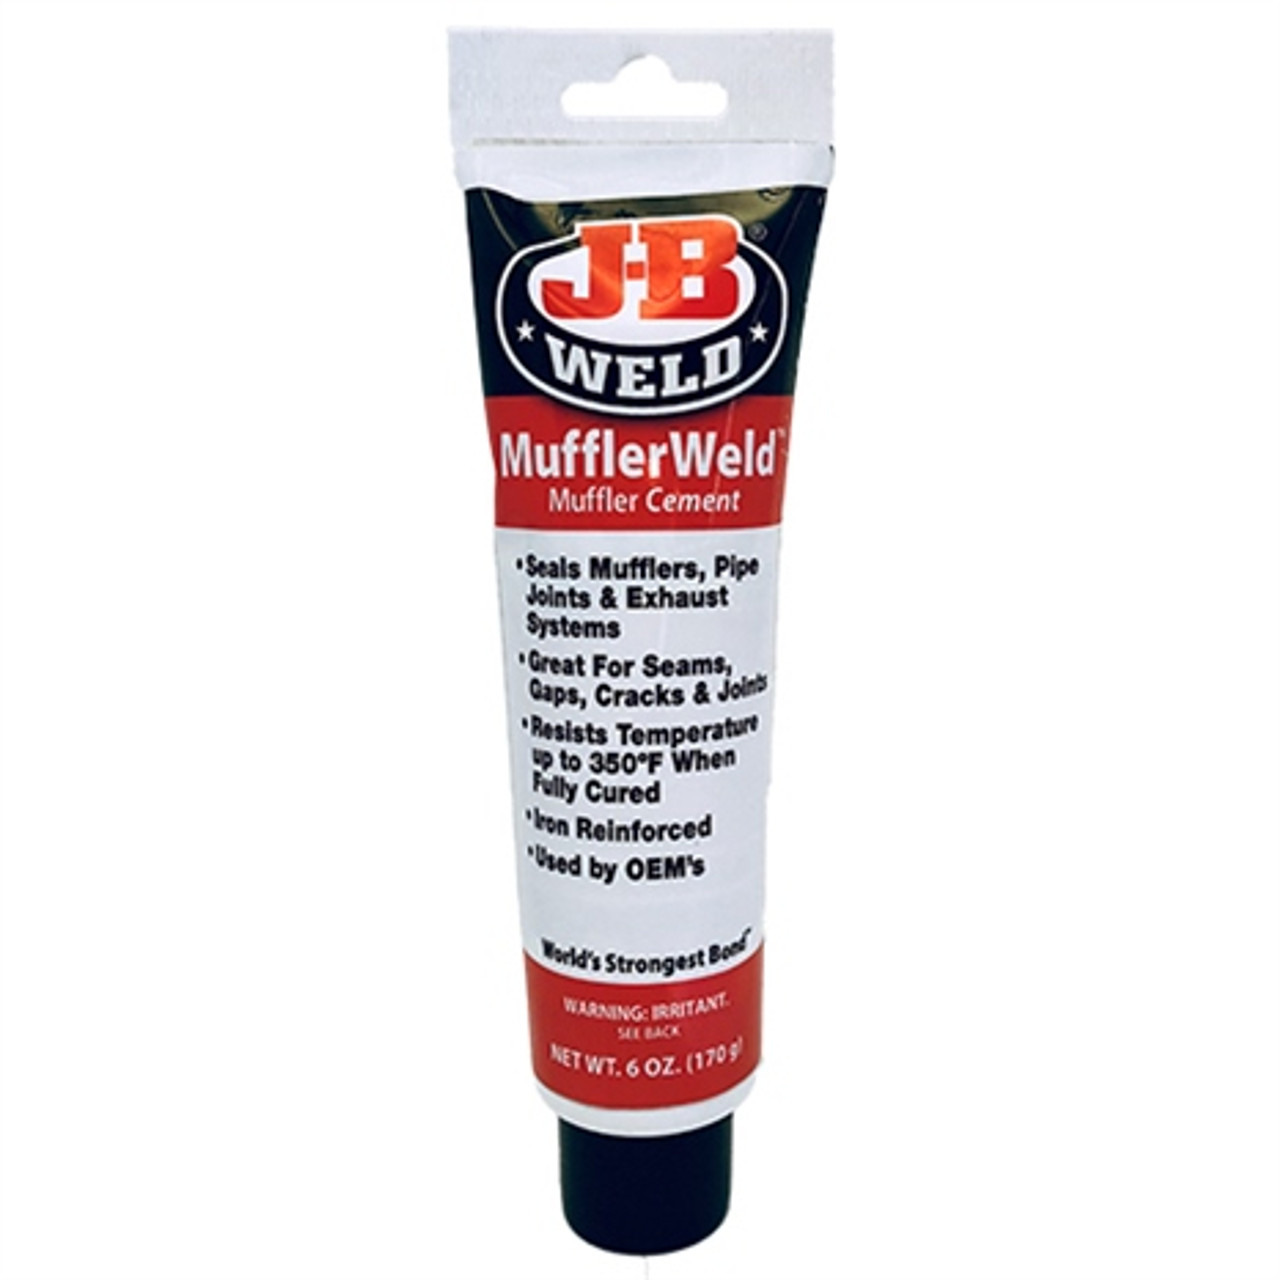 JB Weld 37906 MufflerWeld 6 oz Muffler Cement